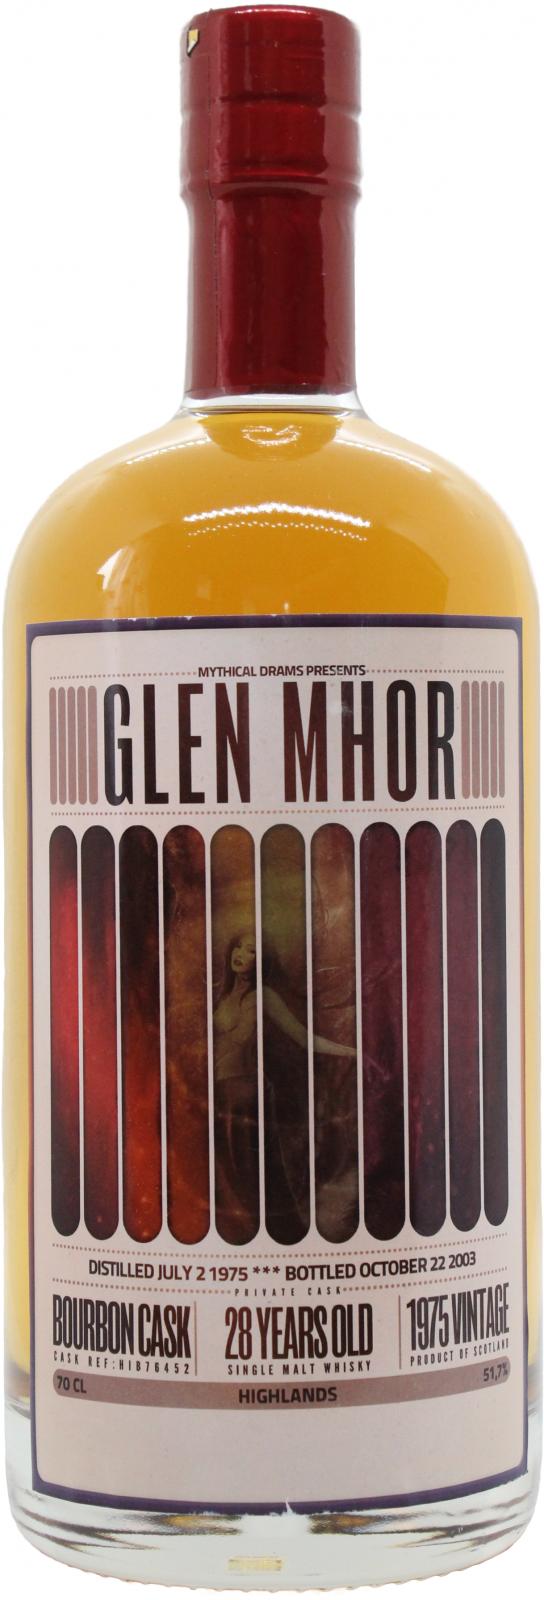 Glen Mhor 1975 UD Bourbon Cask HIB76452 Private Bottling 51.7% 700ml